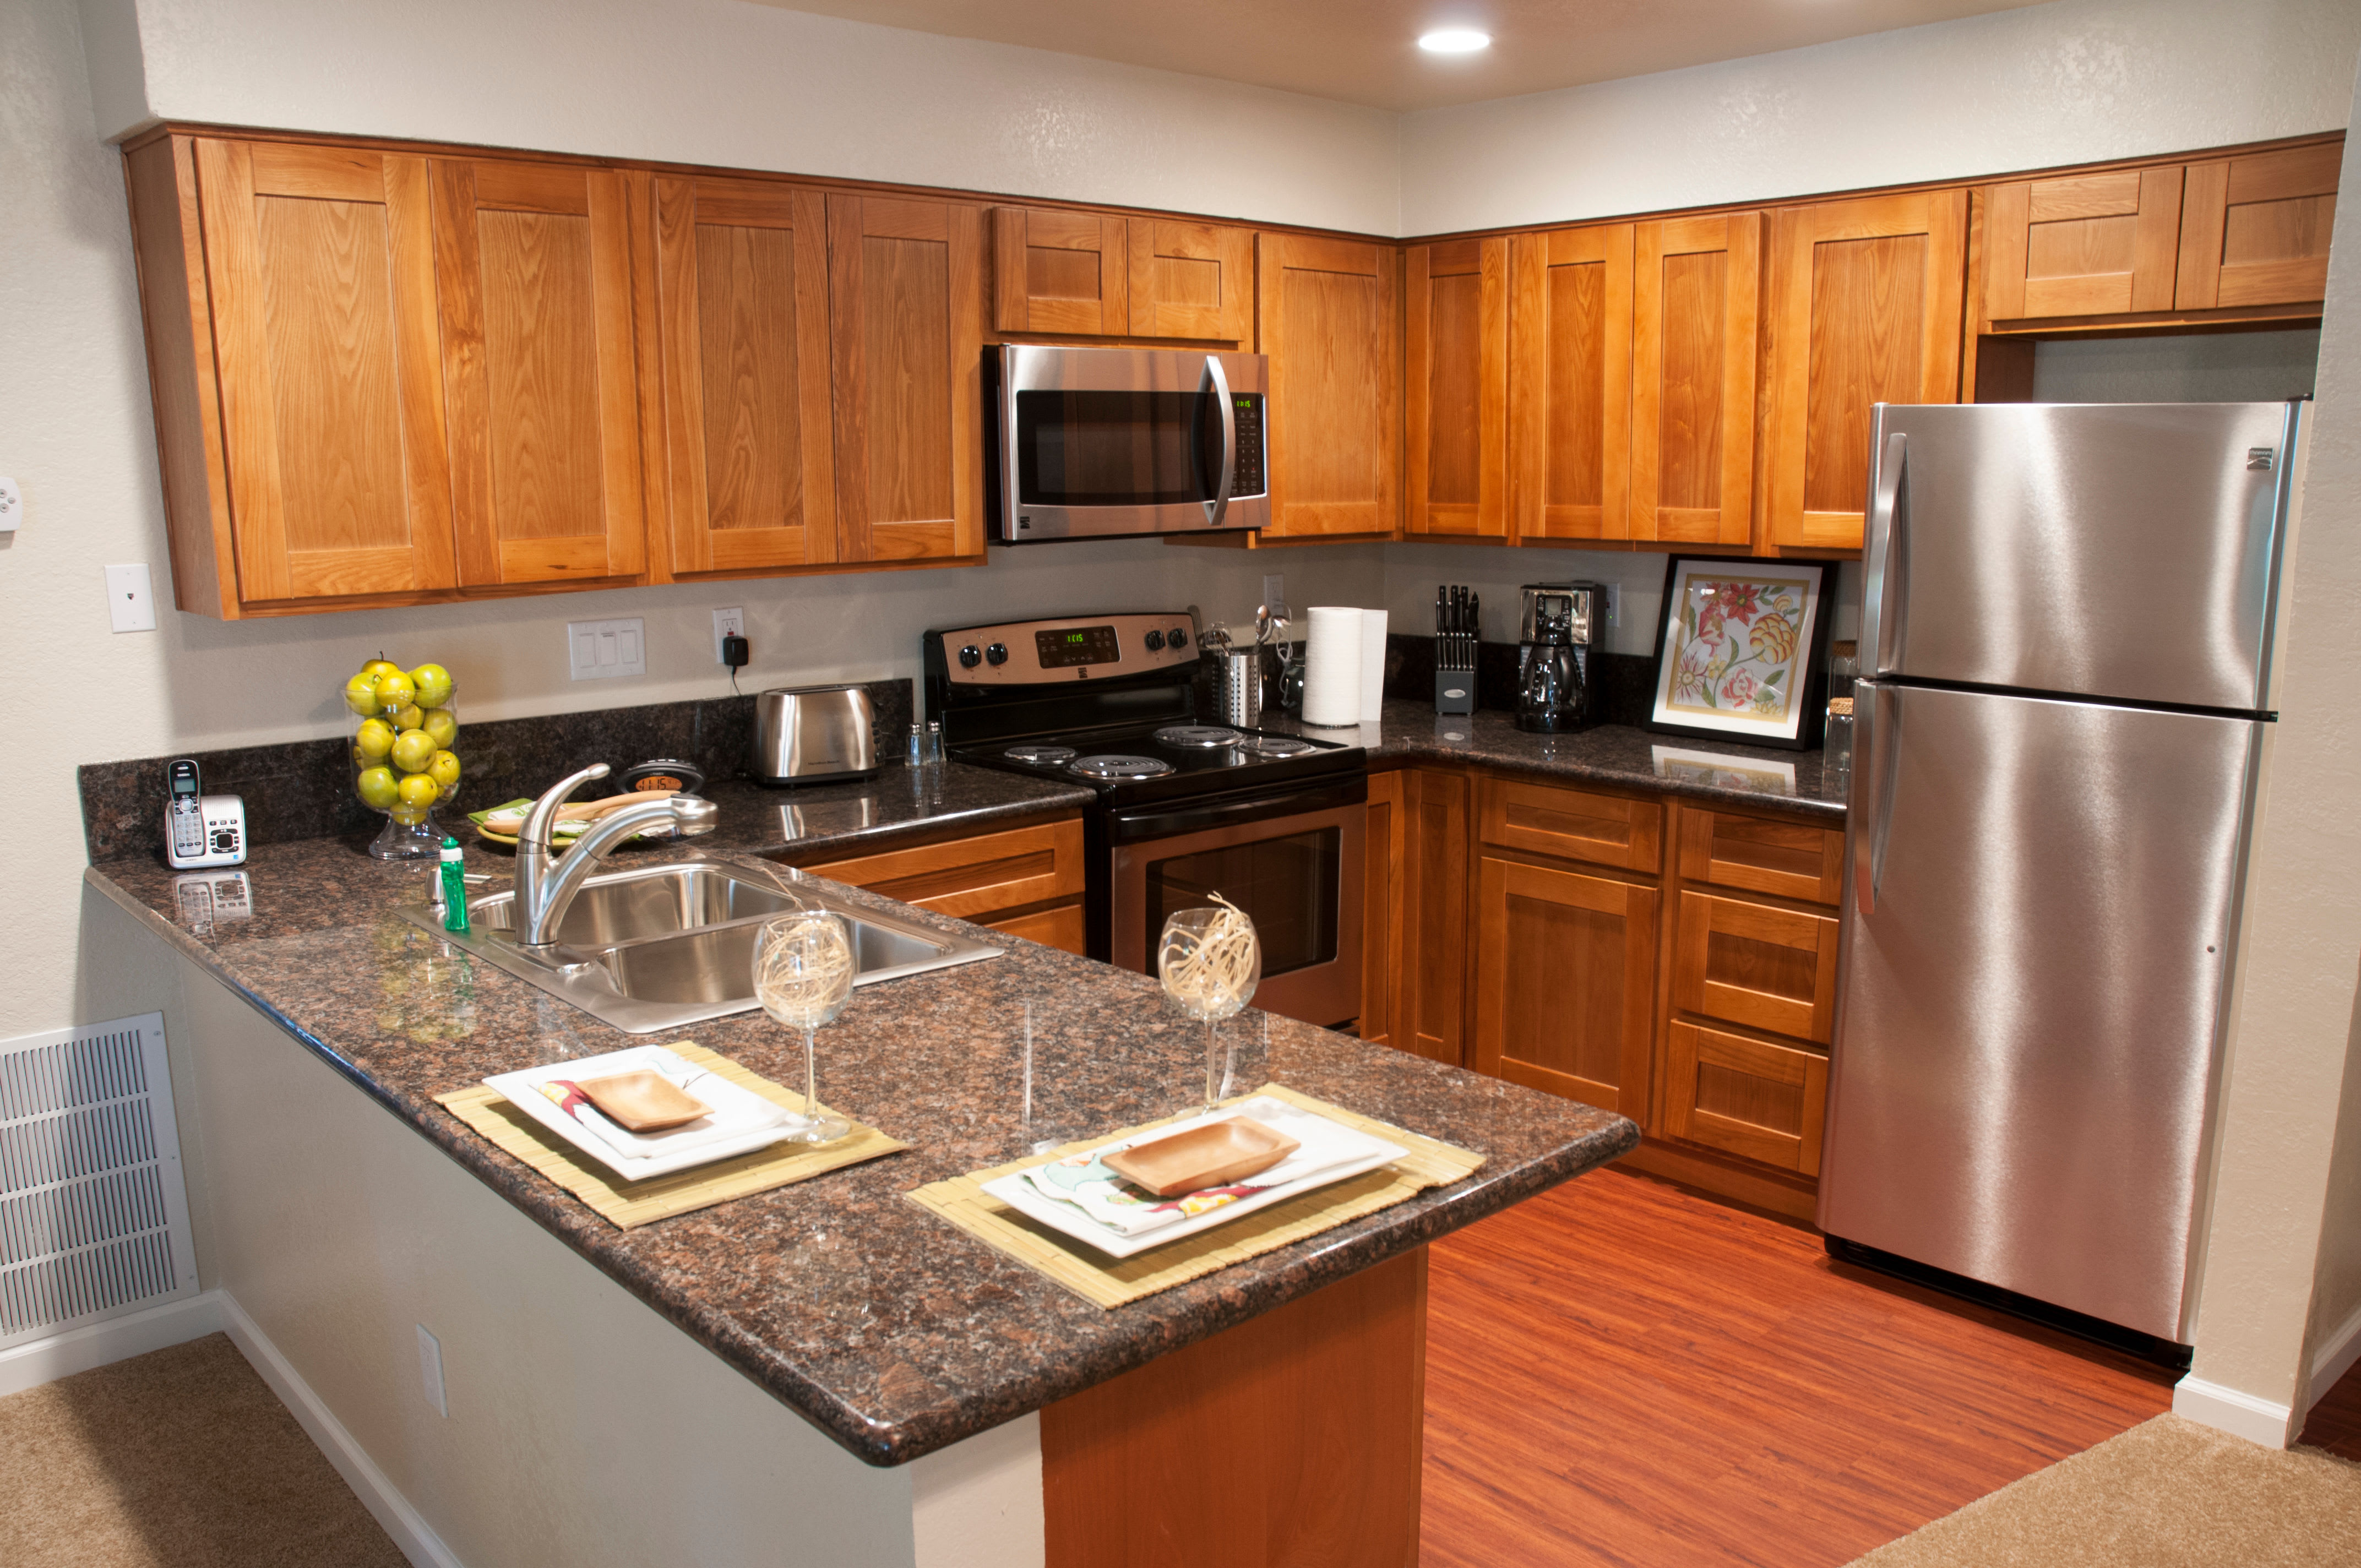 Our apartments in Modesto, California showcase a beautiful kitchen